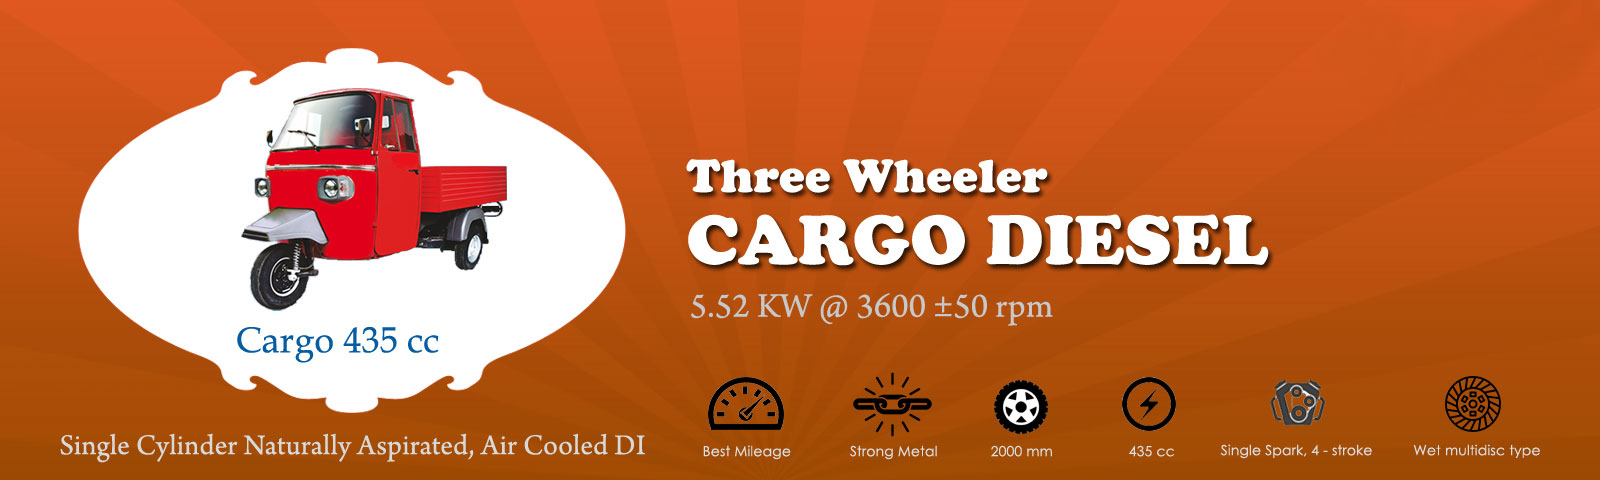 banner_Three-Wheeler-Passenger-diesel_fleek_motors (1)